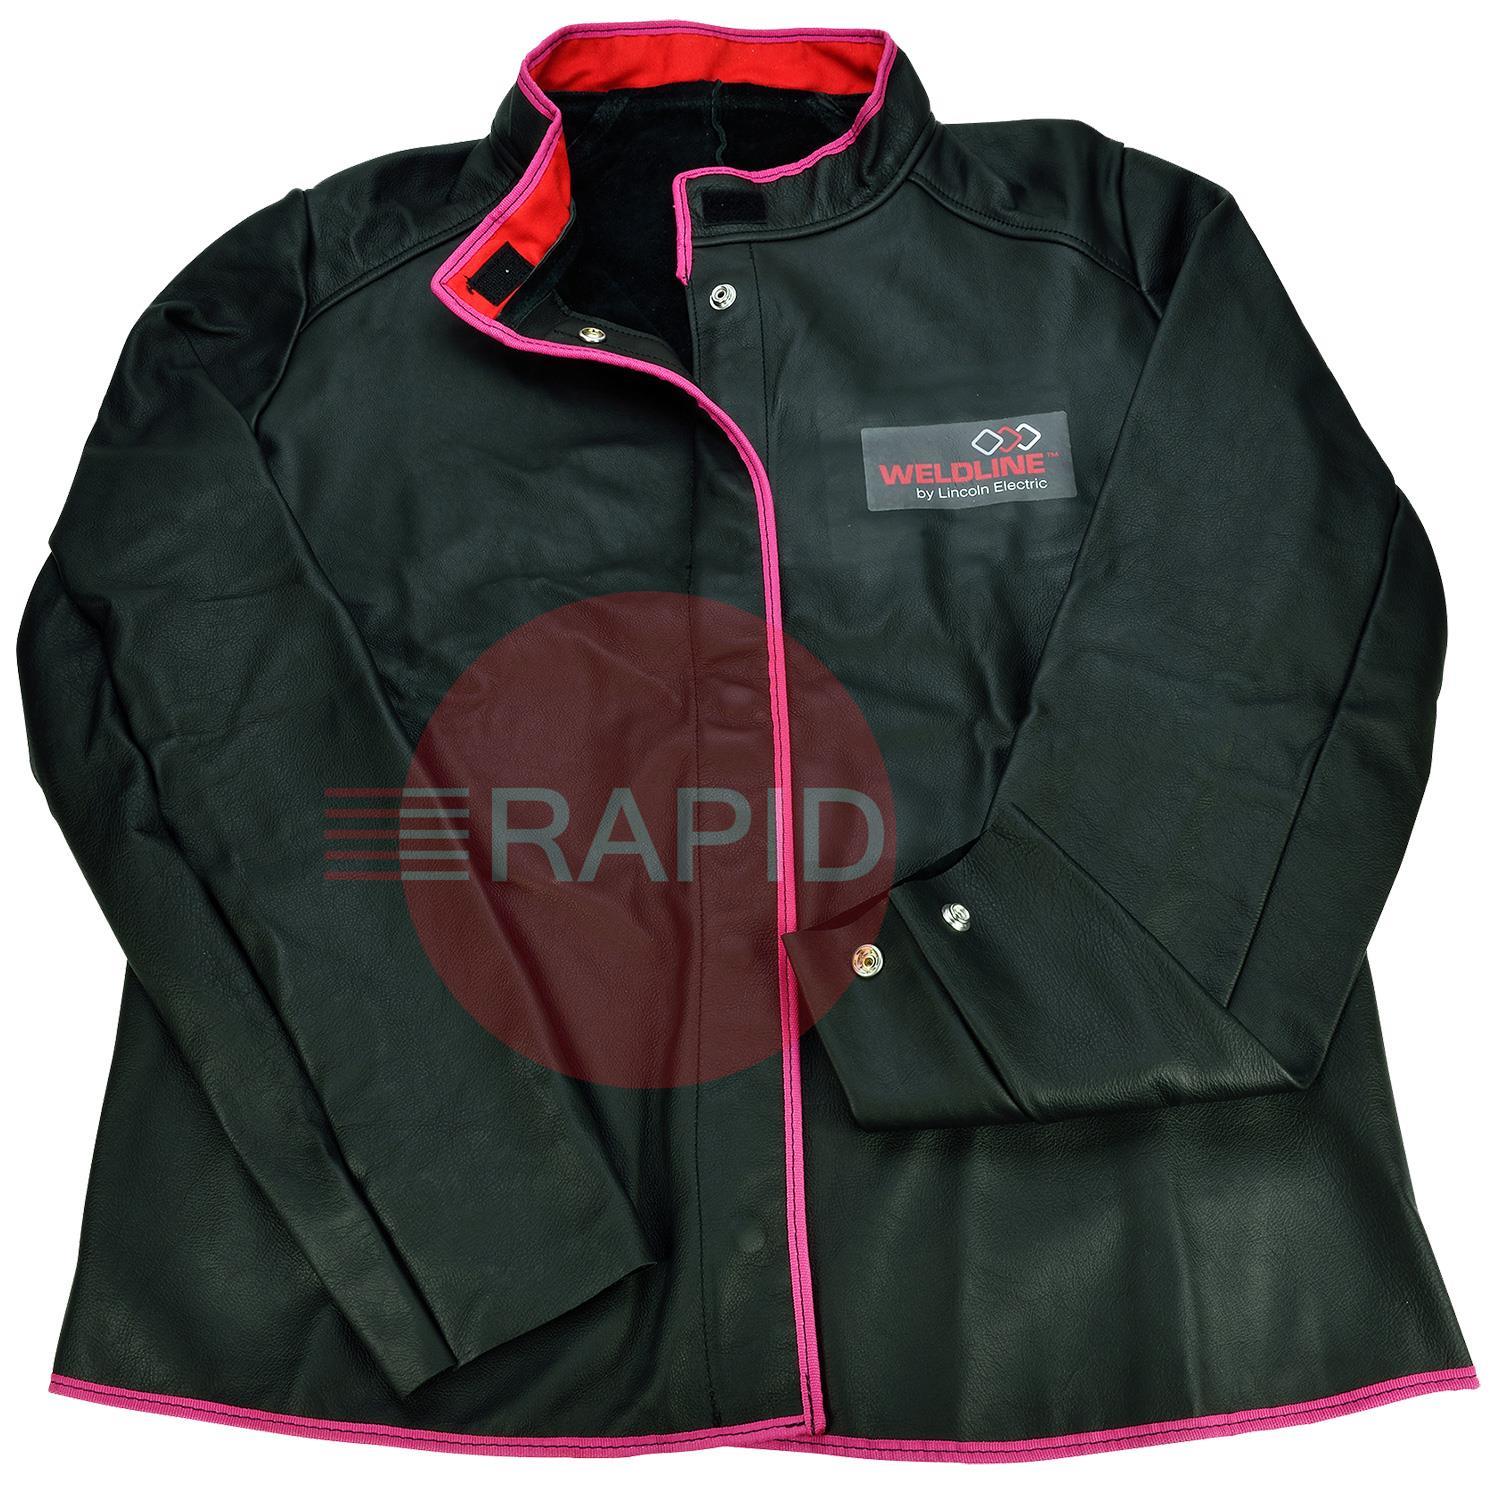 WJL-L-2019  Weldline Female Grain Leather Welding Jacket with Split Leather Bag - Large